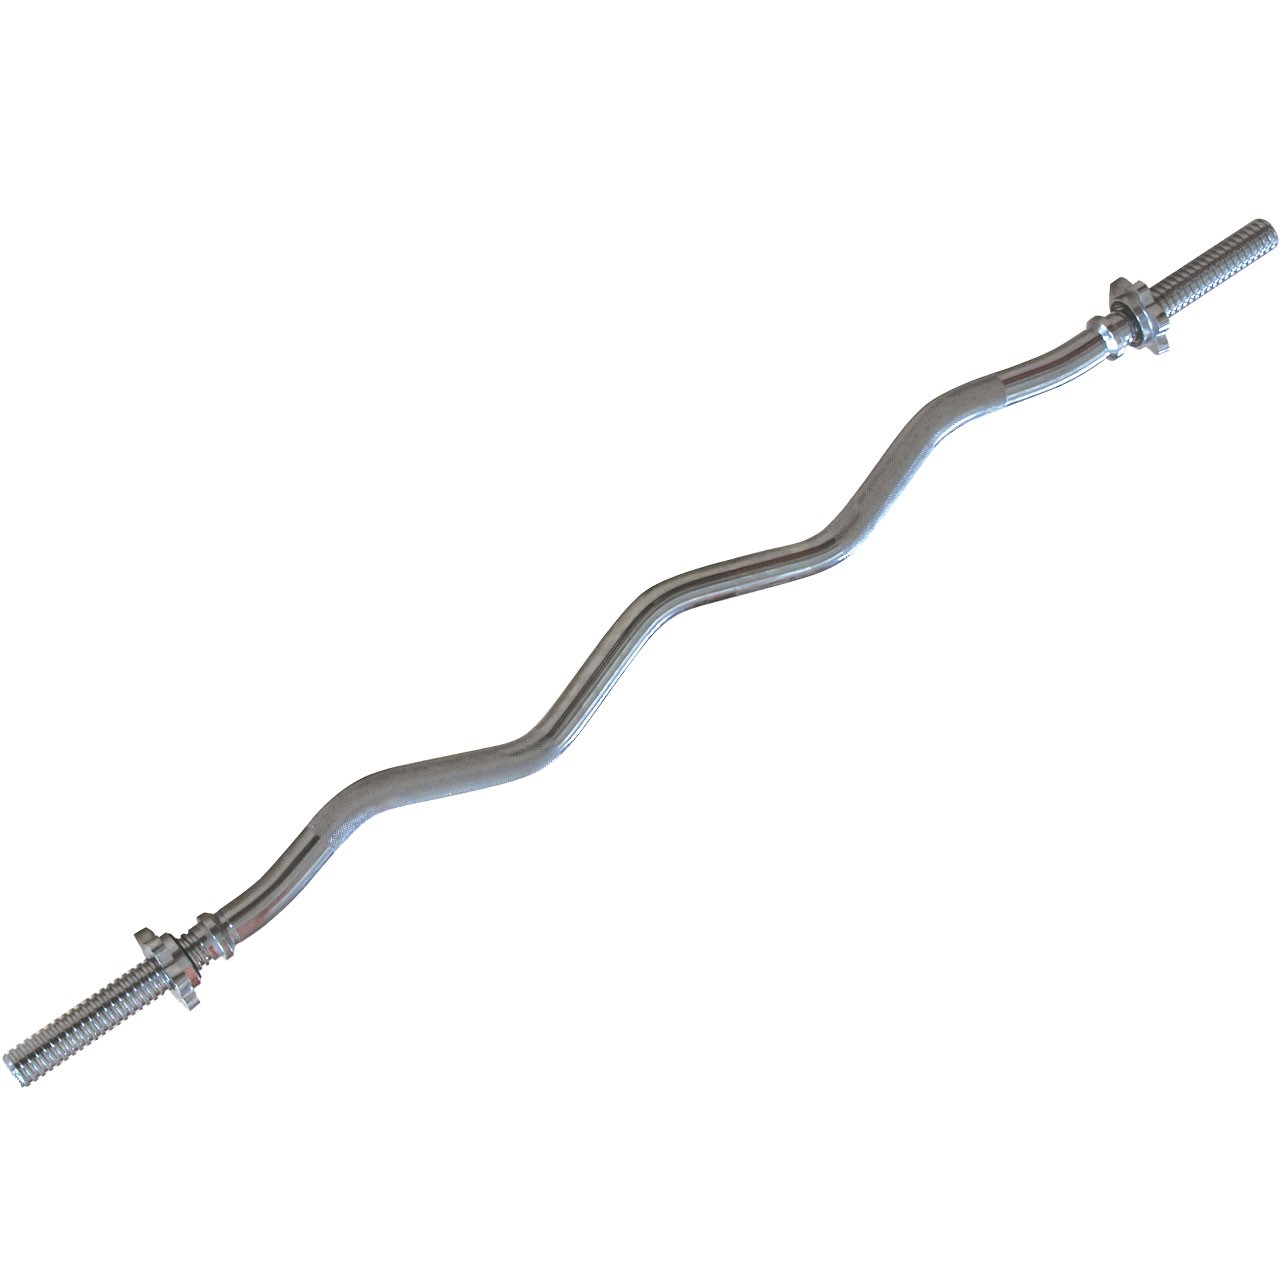 Tunturi 120 cm Curl Bar with 30 mm with Screw Collars